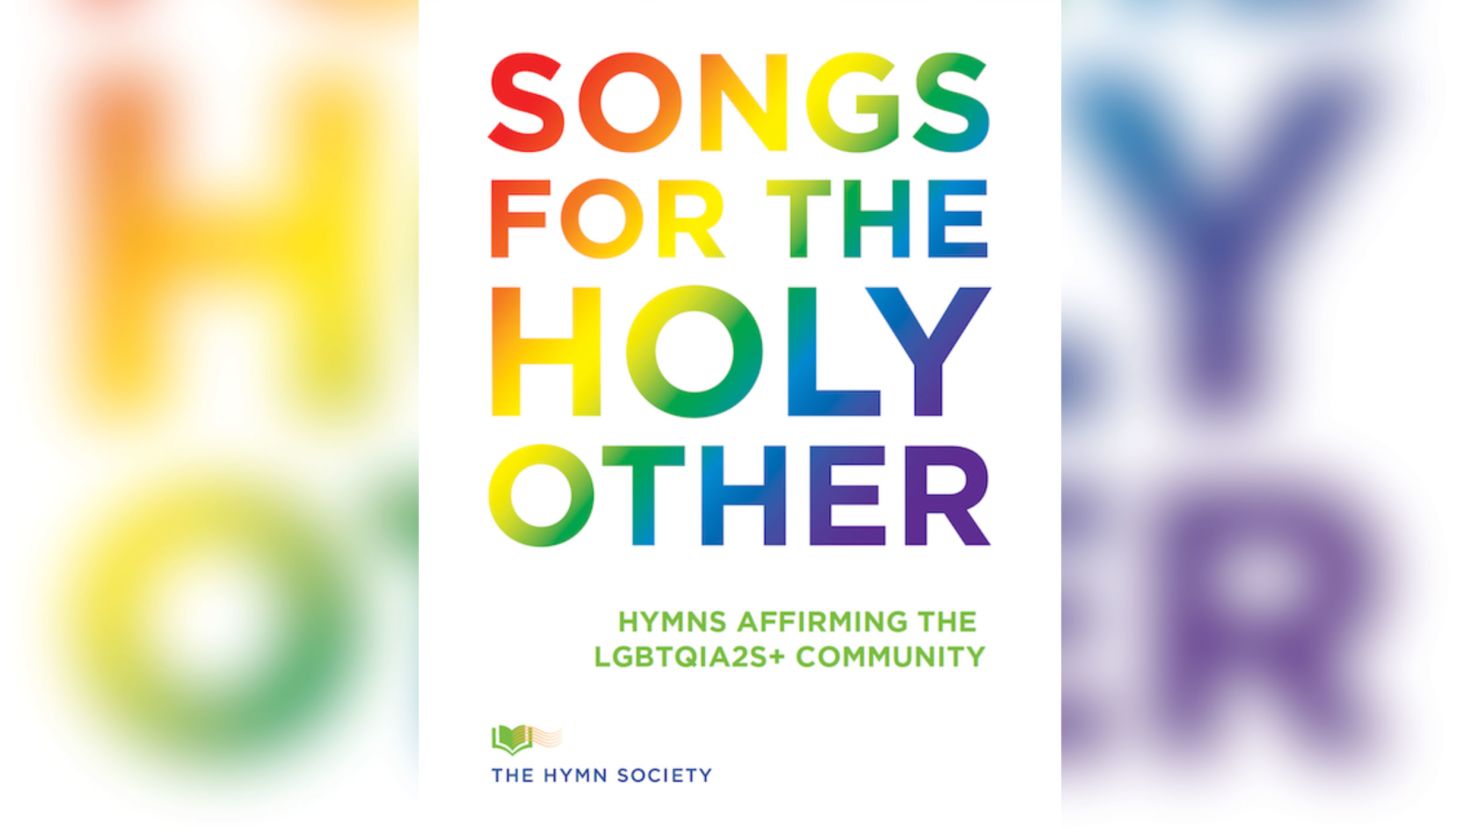 The 50 Best Christian Wedding Songs, Hyms & Worship Songs -  